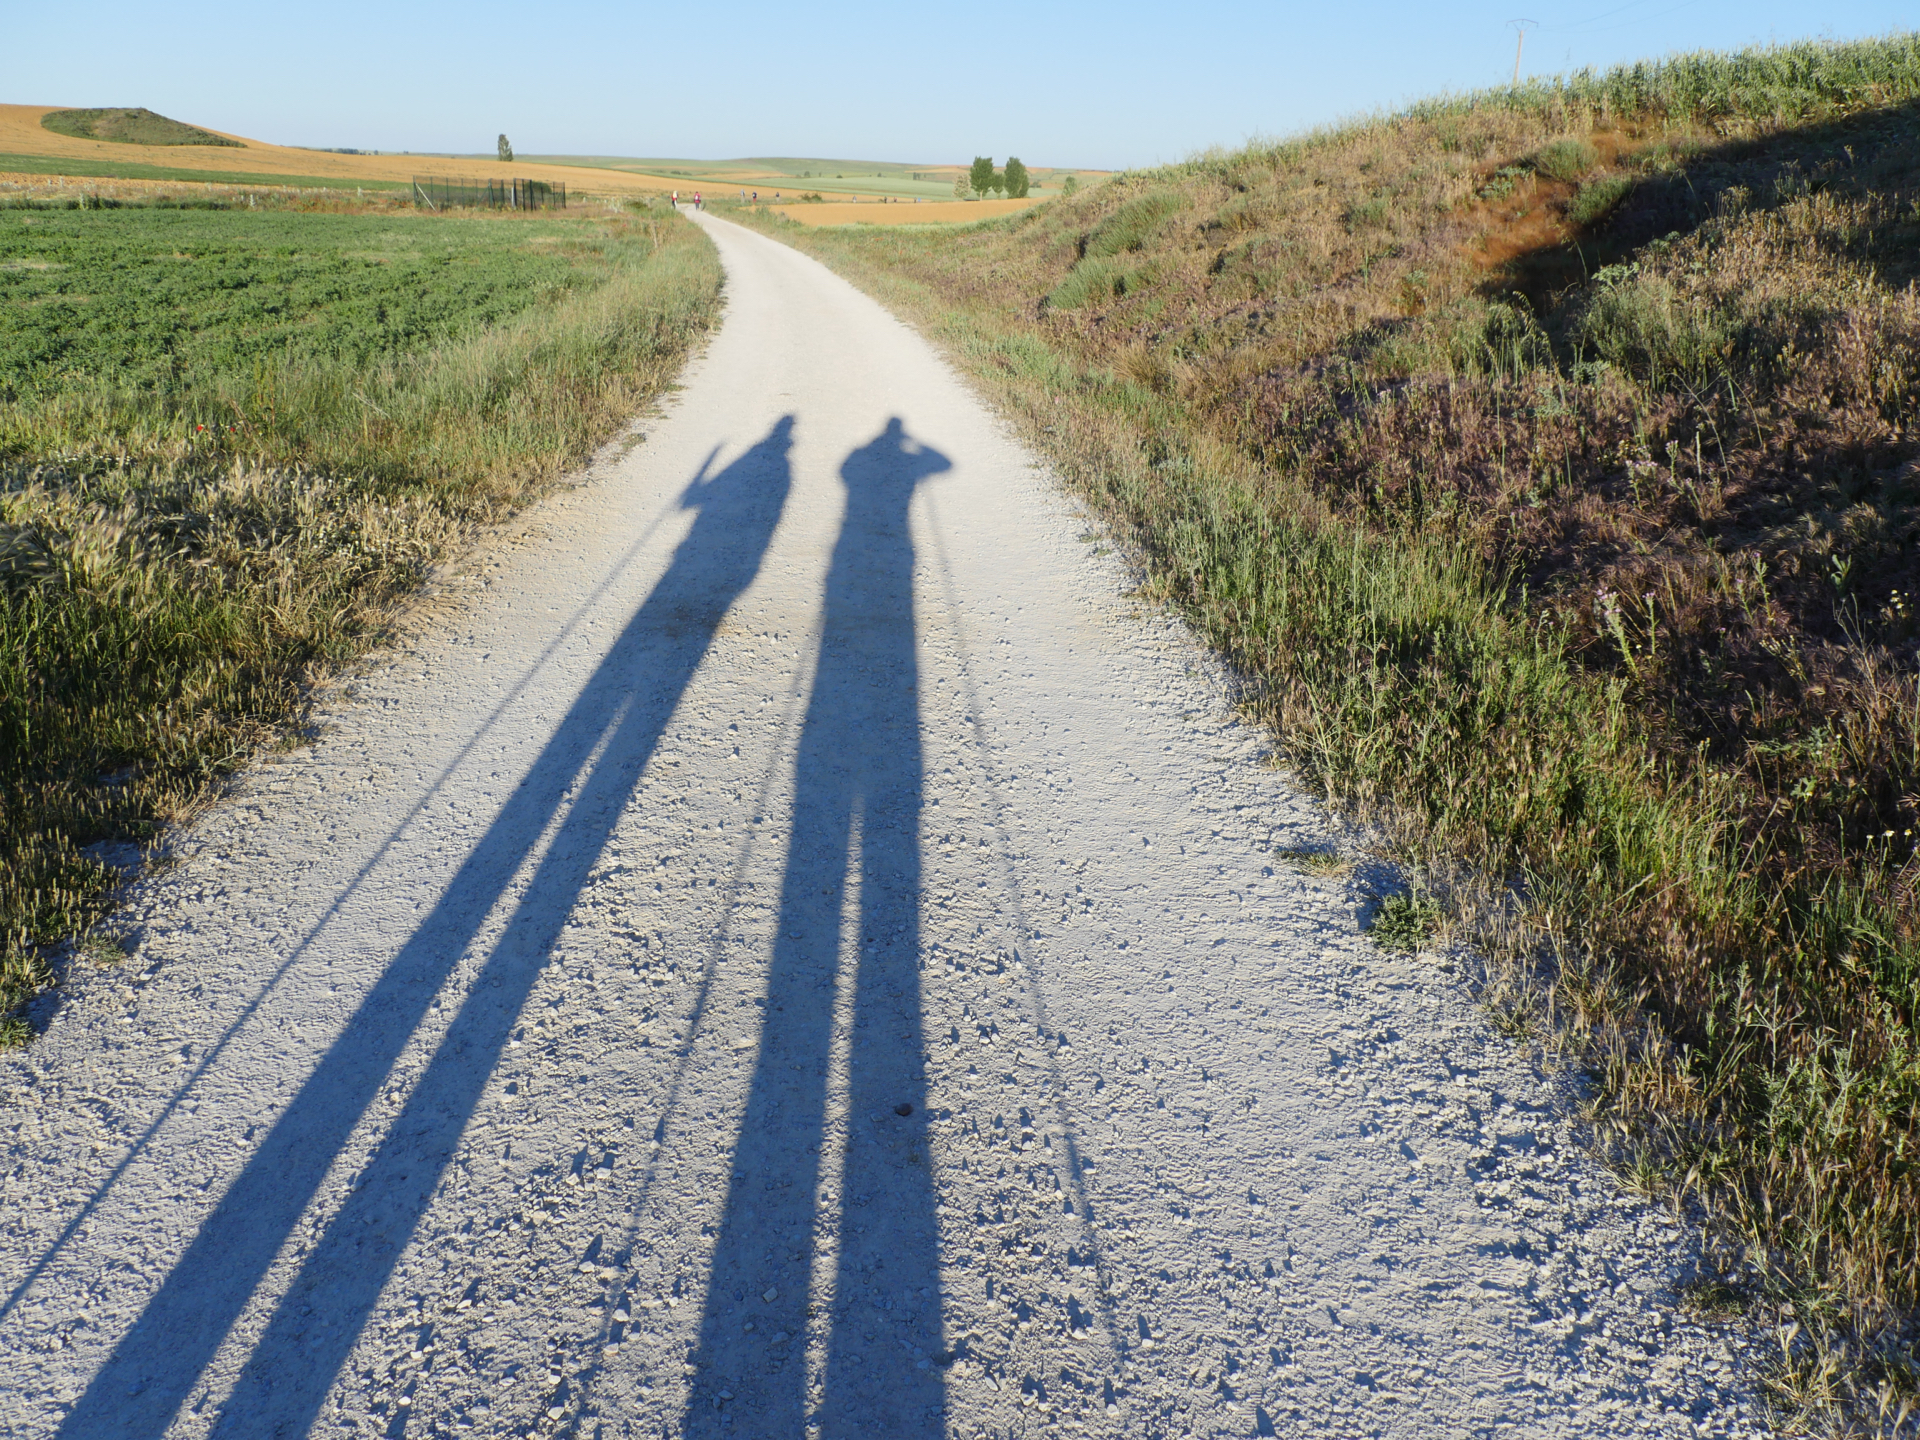 Shadows of two pilgrims appear on a historic Roman road near Mansilla de Las Mulas, Spain.